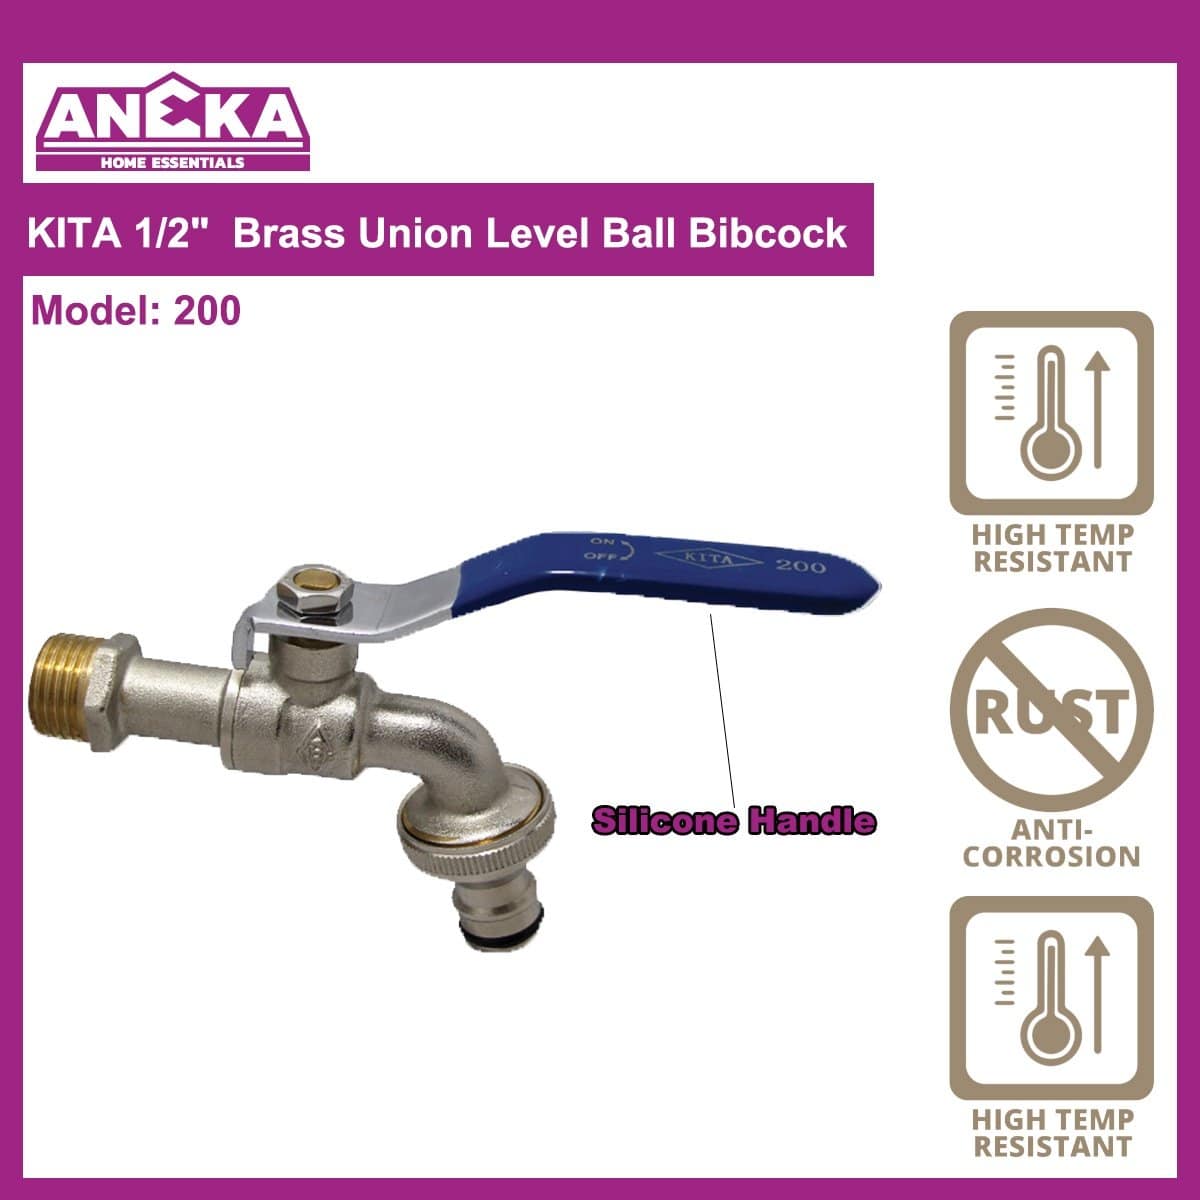 KITA 1/2" Brass Union Level Ball Bibcock 200